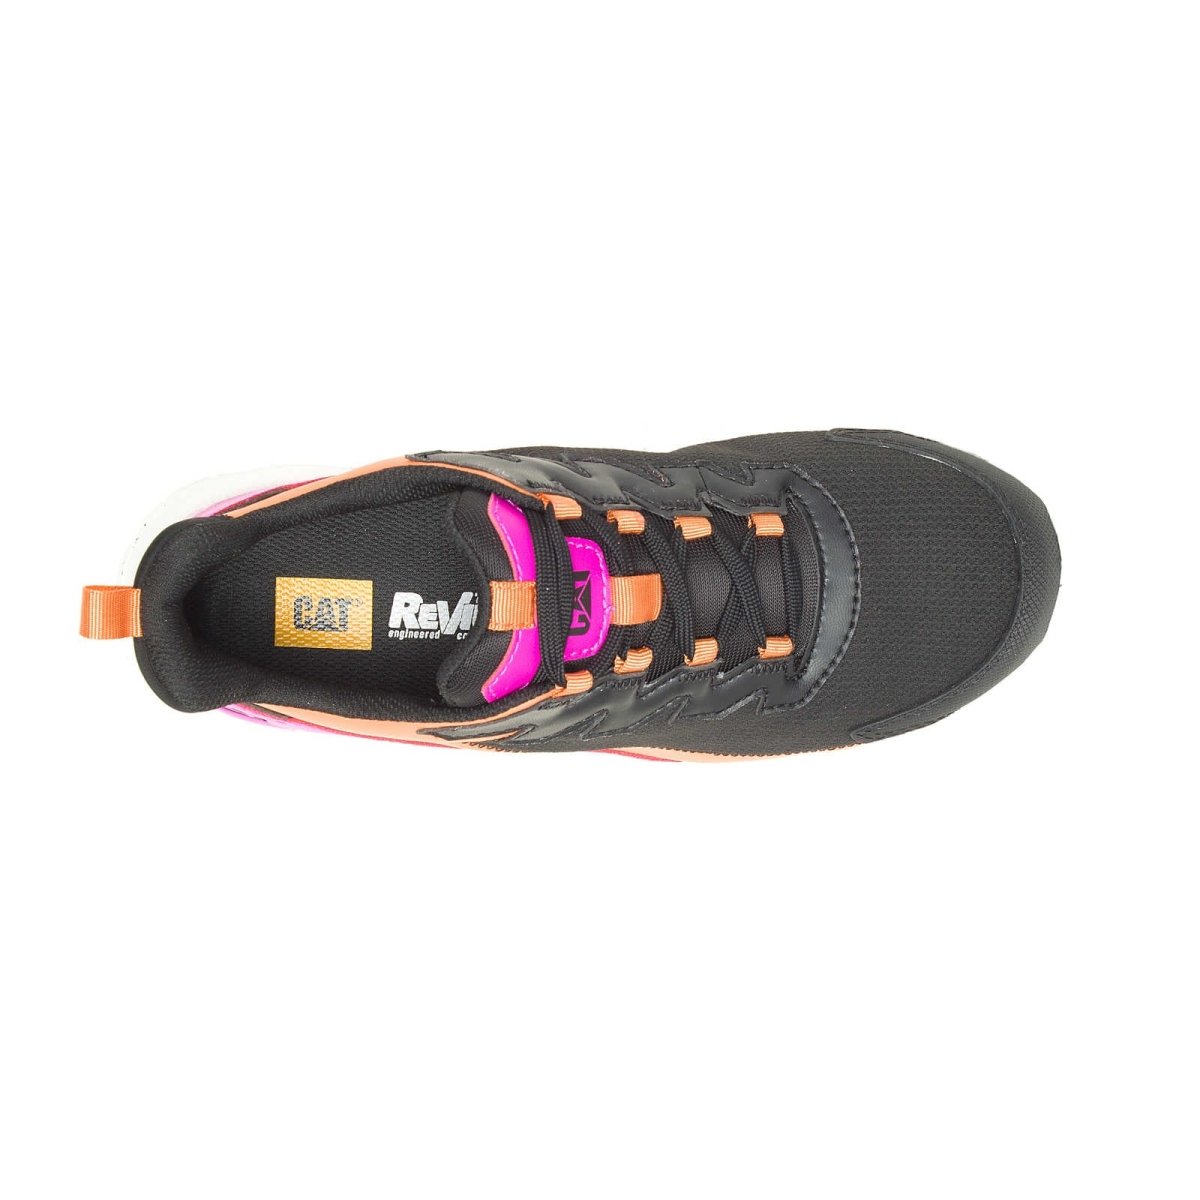 CATERPILLAR STREAMLINE RUNNER CARBON COMPOSITE TOE WOMEN'S WORK SHOE (P91495) IN BLACK/PINK - TLW Shoes